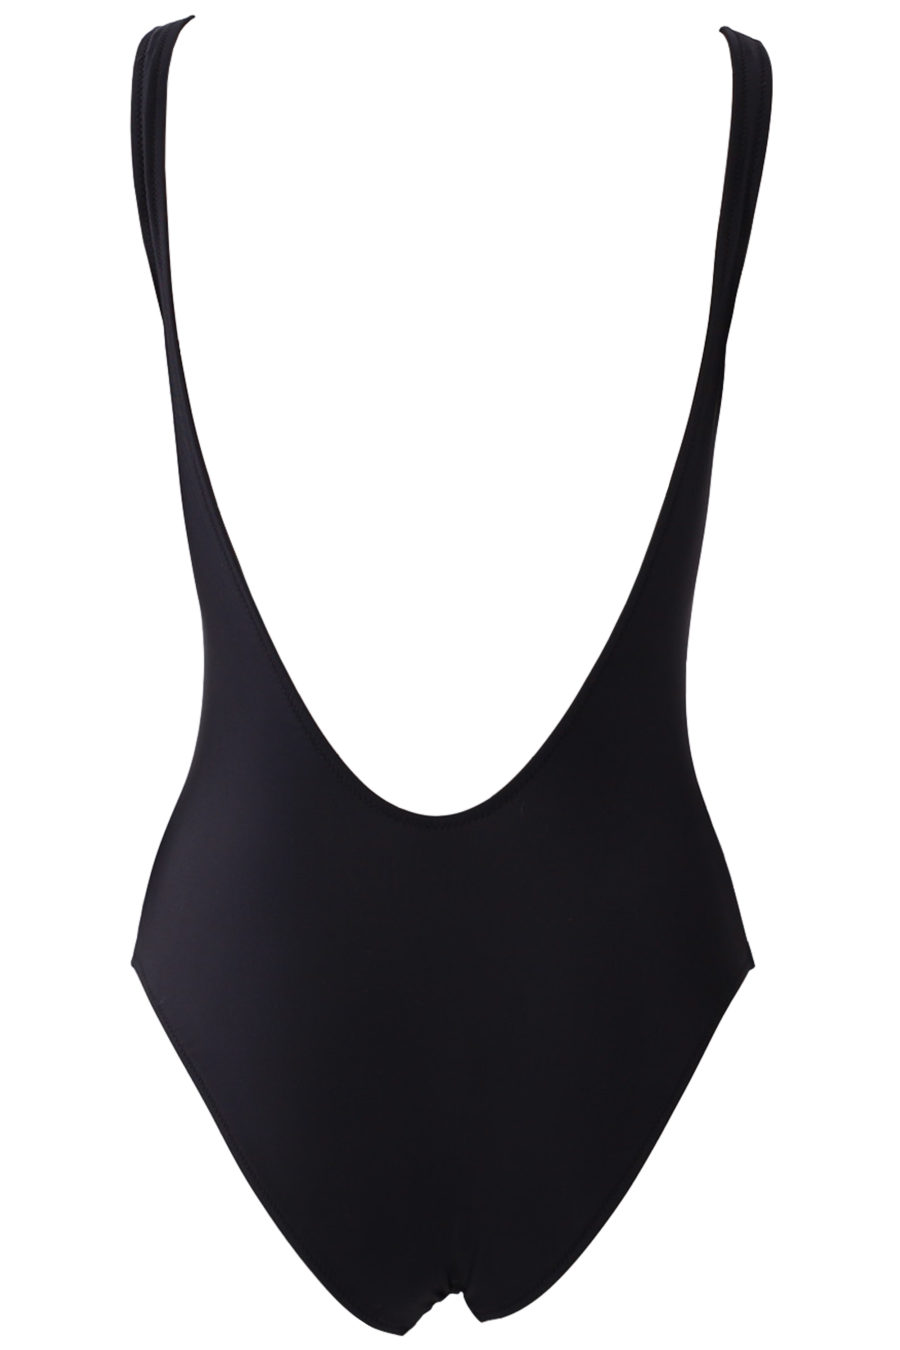 Black one-piece swimming costume with large logo - 818abea9c5f0bb133e32965f95c5707070864962ec